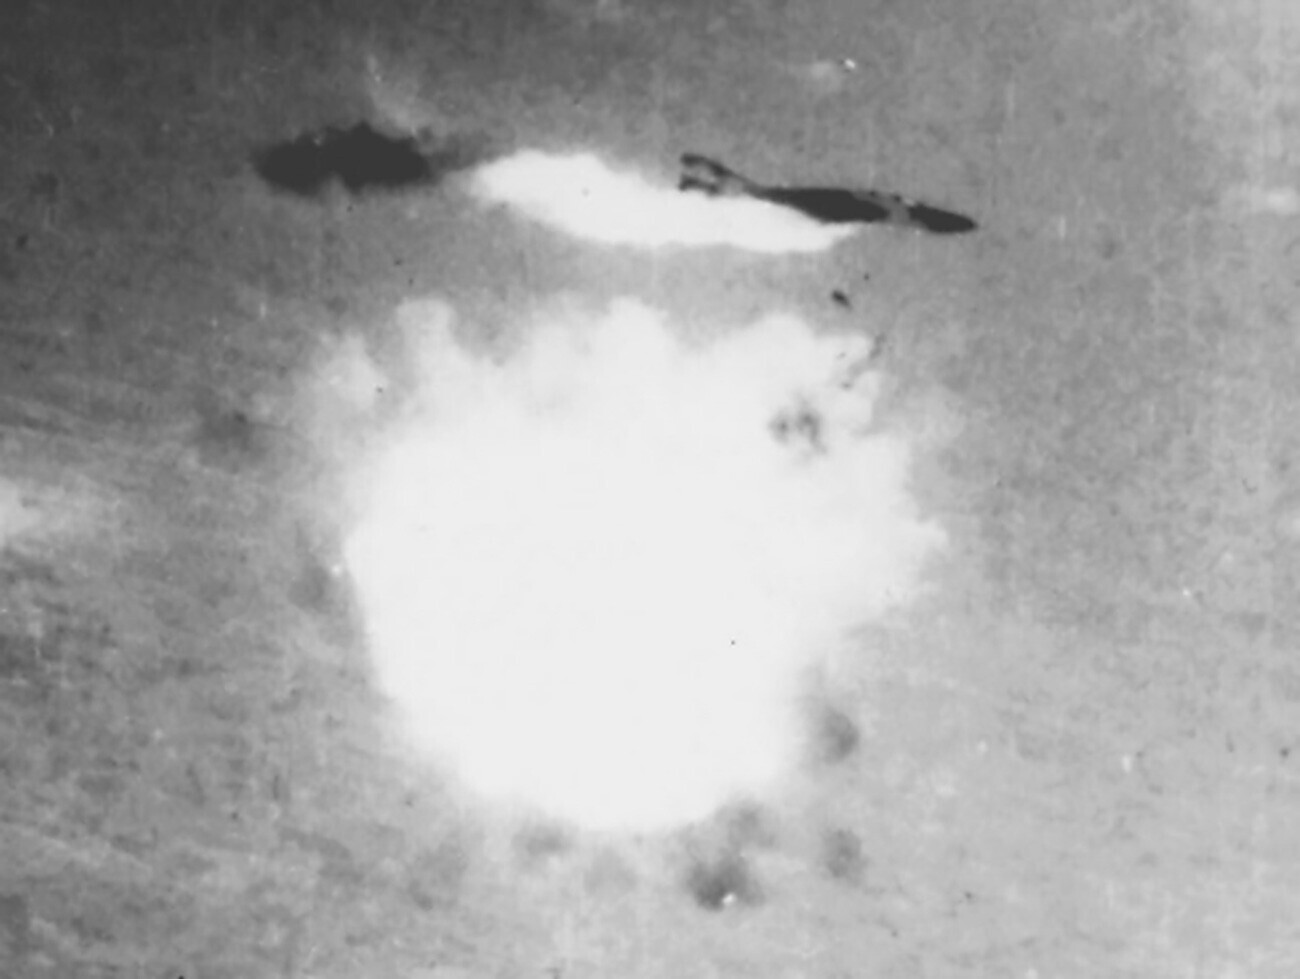 Cazabombardero F-4 destruido por un misil soviético.